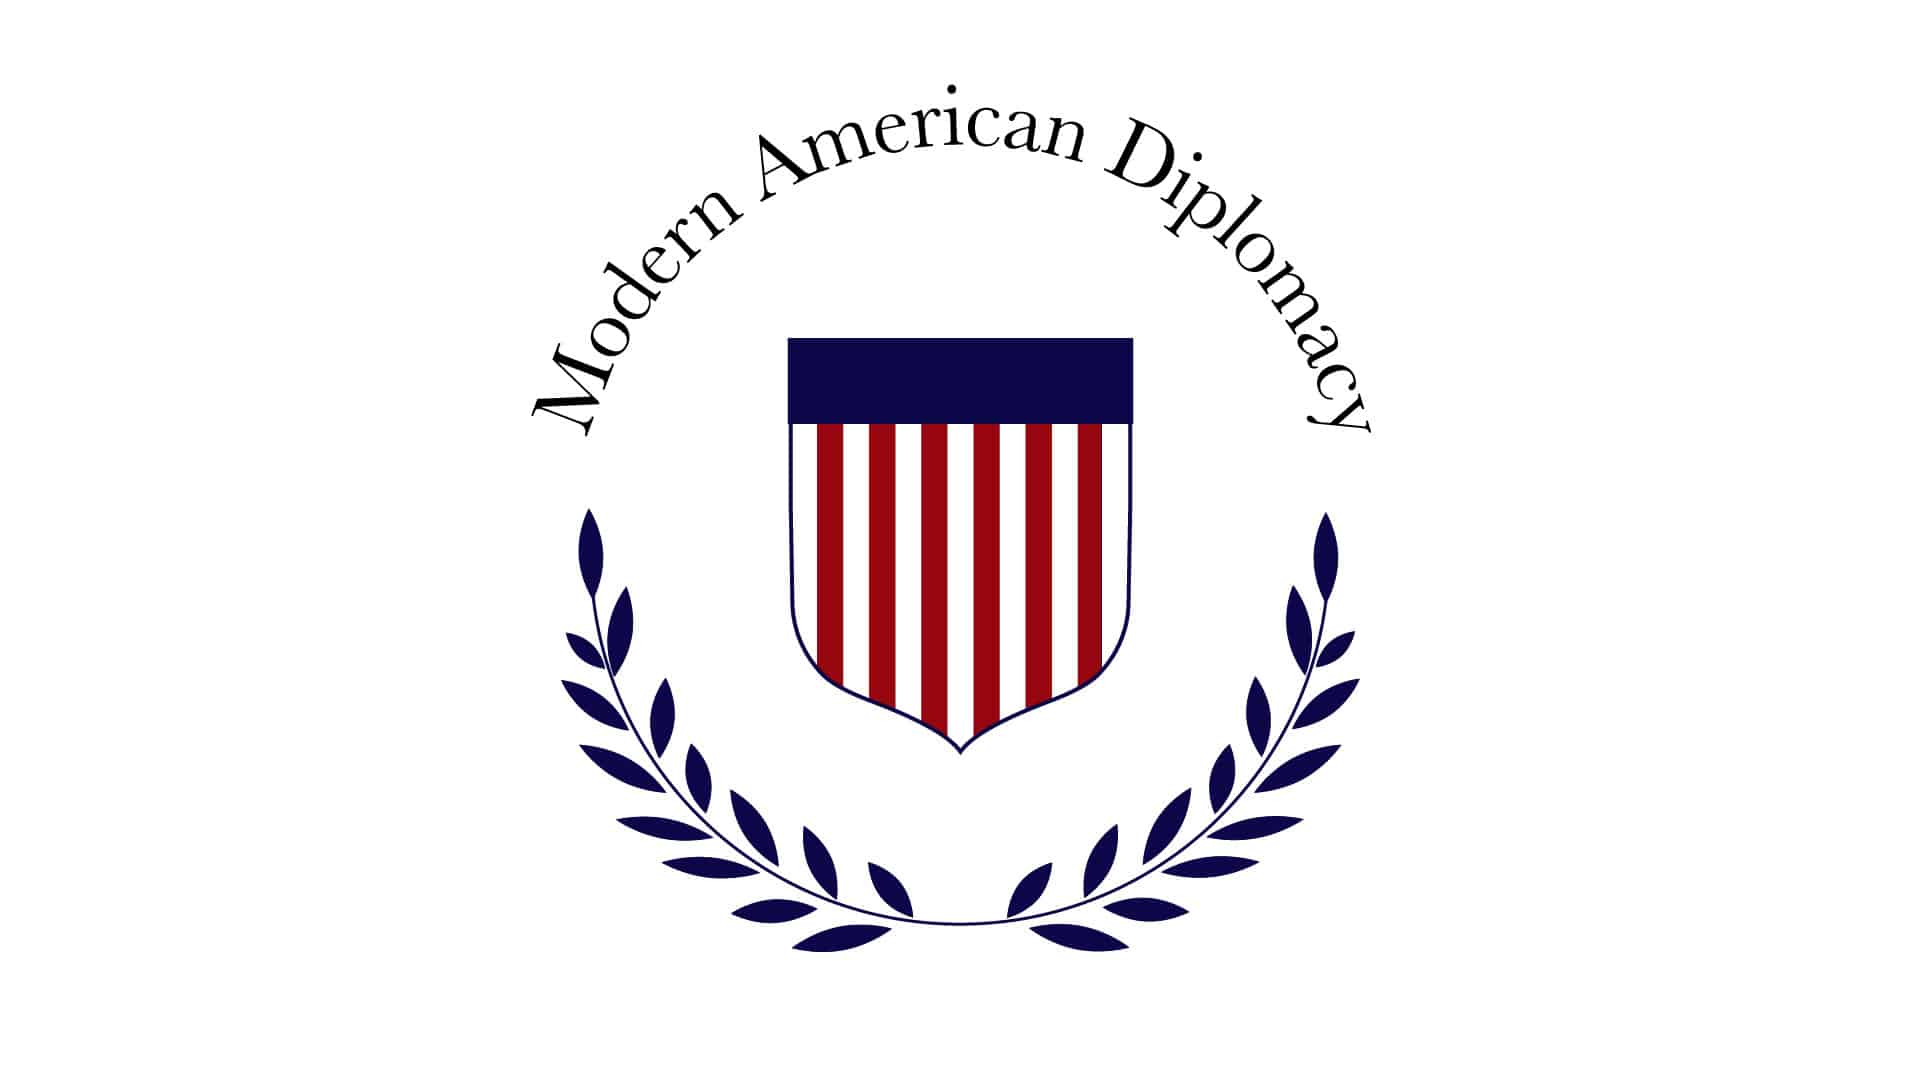 Modern American Diplomacy